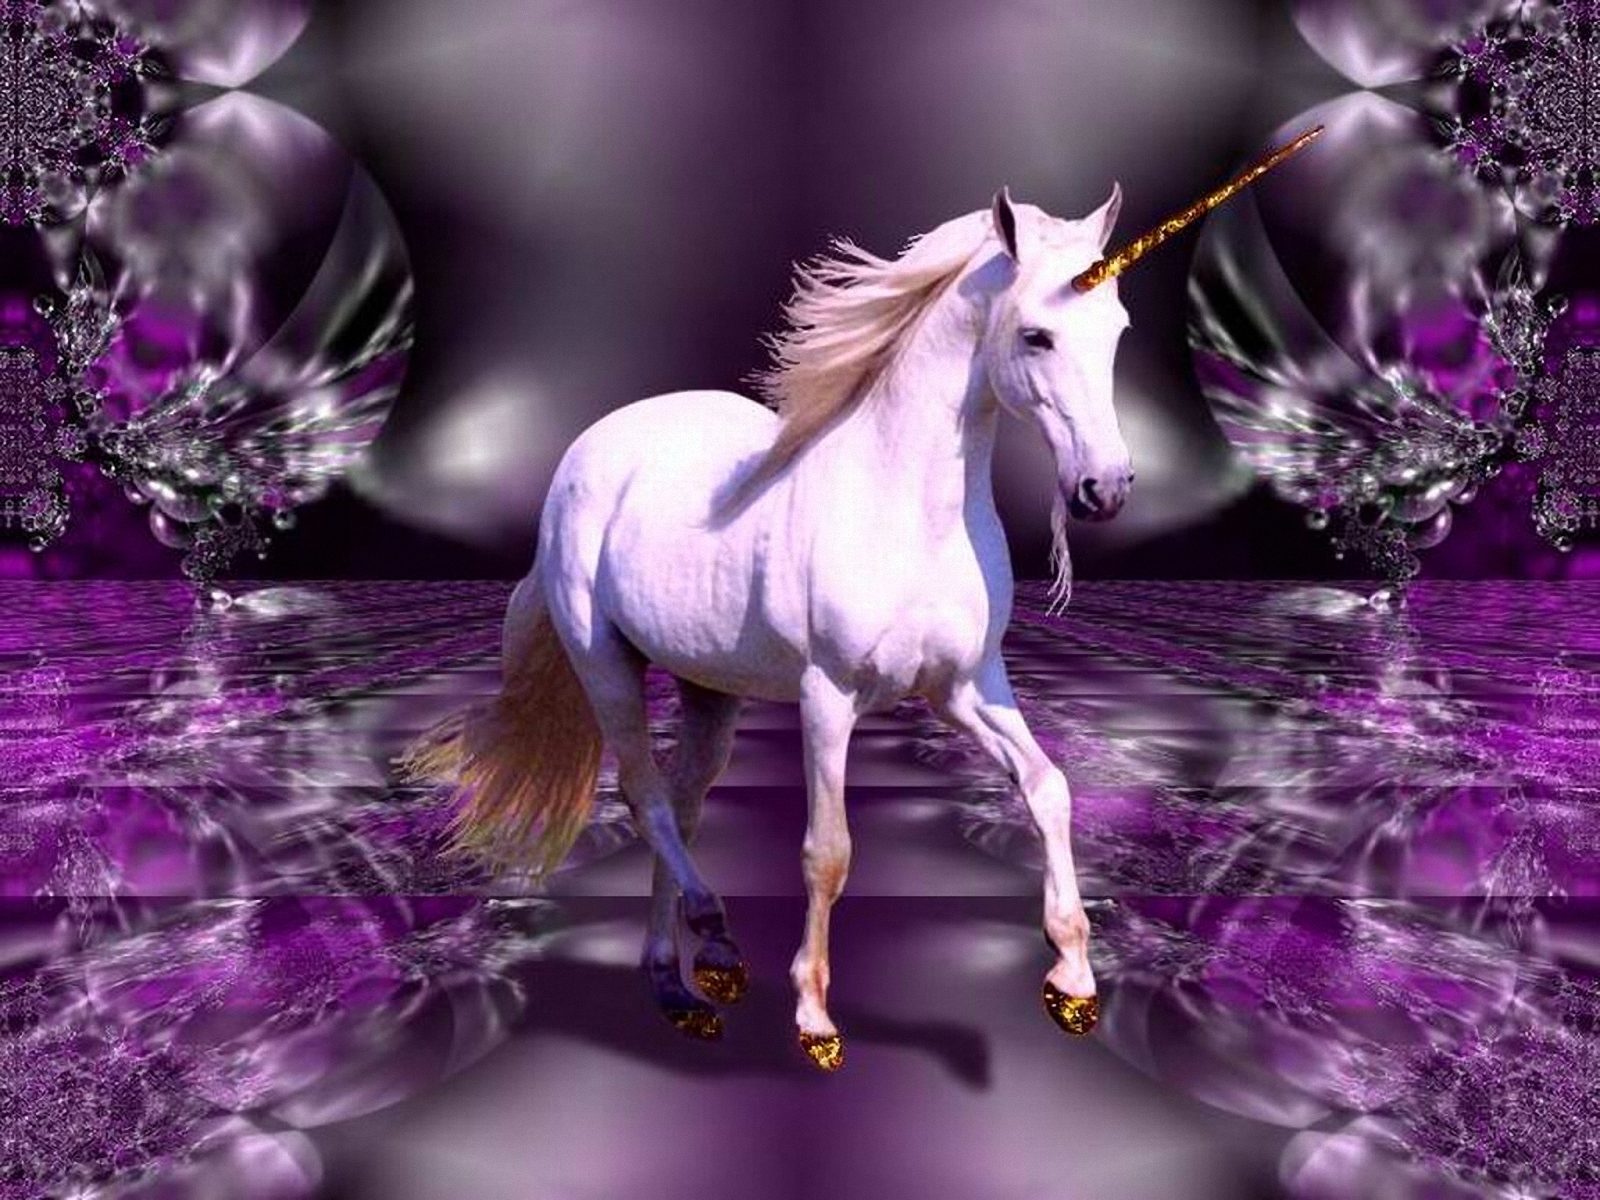 fondos de pantalla de unicornio hd,unicornio,púrpura,personaje de ficción,lavanda,criatura mítica